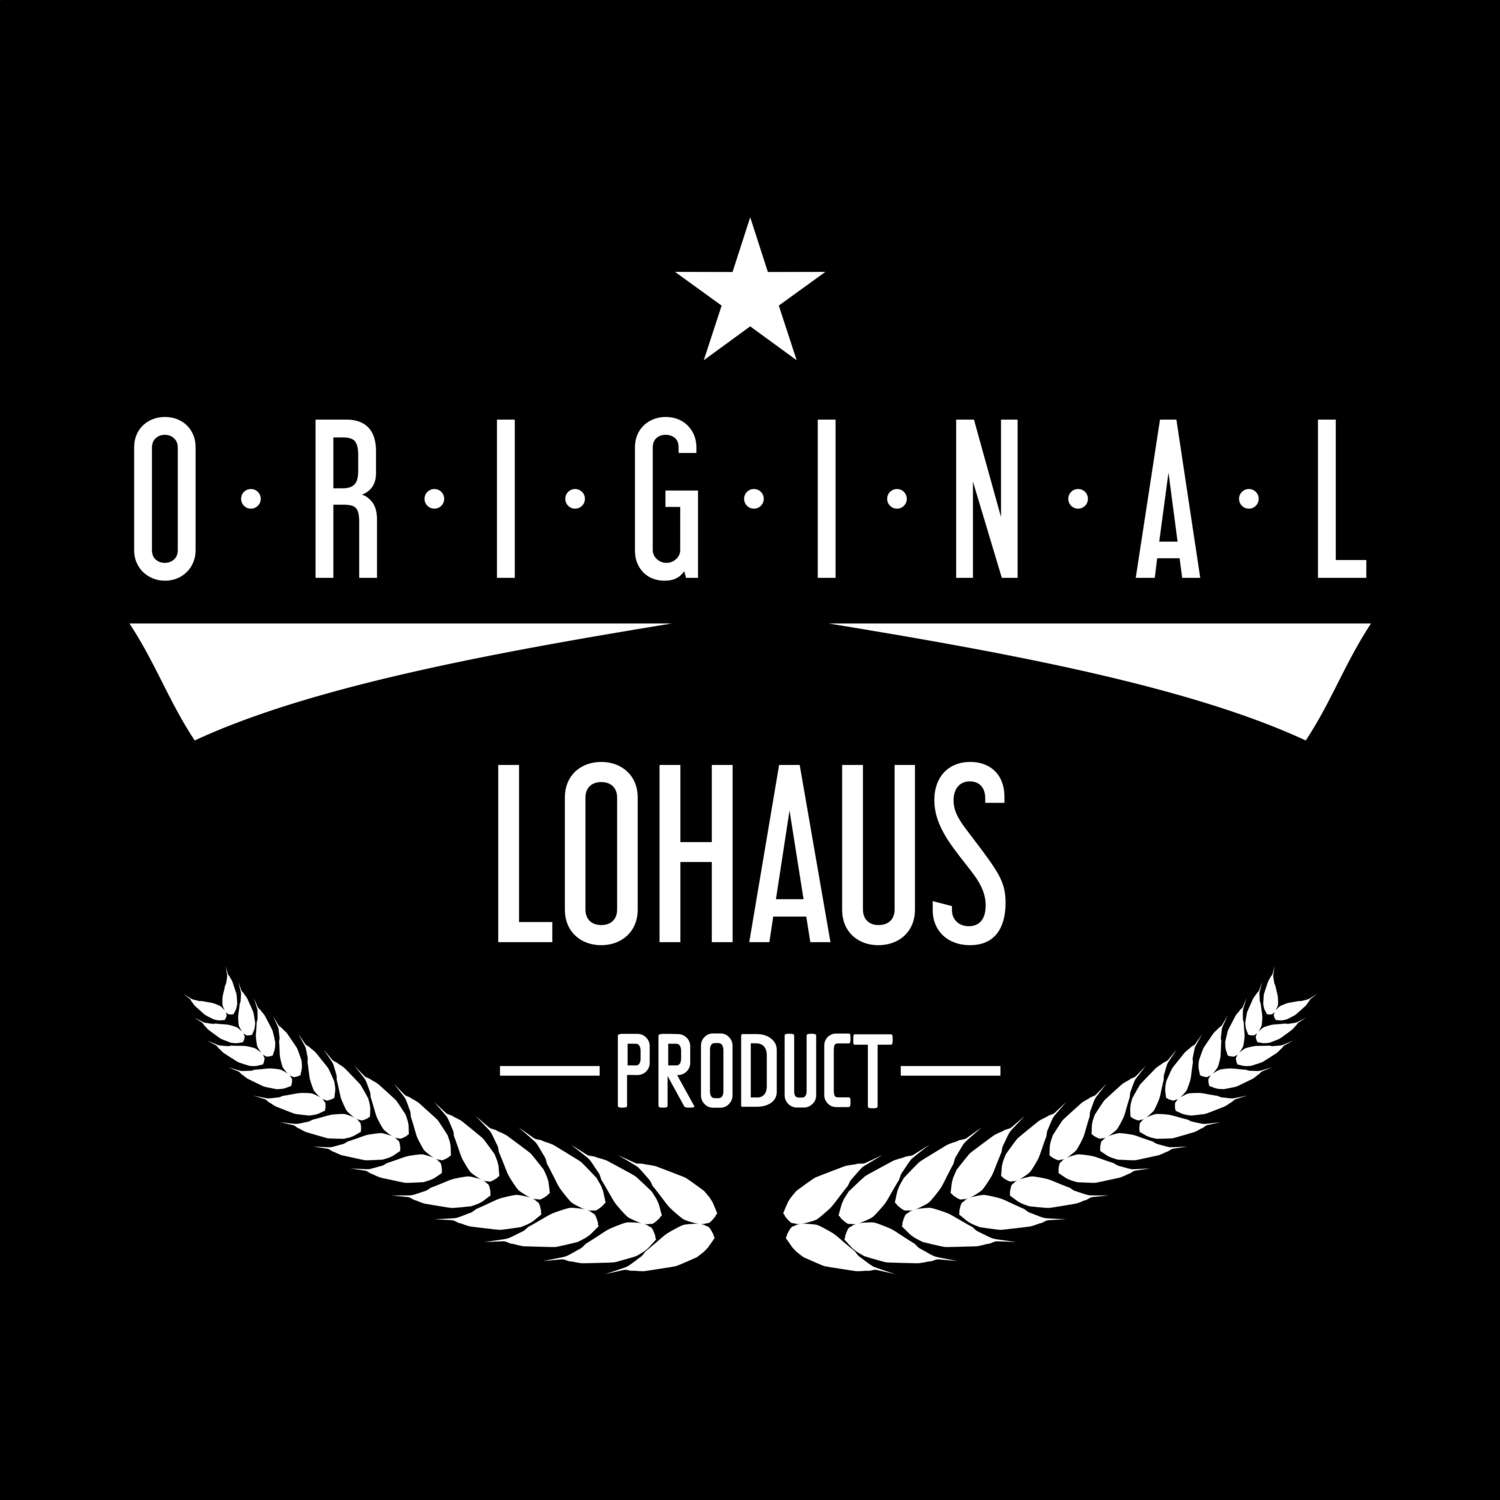 Lohaus T-Shirt »Original Product«